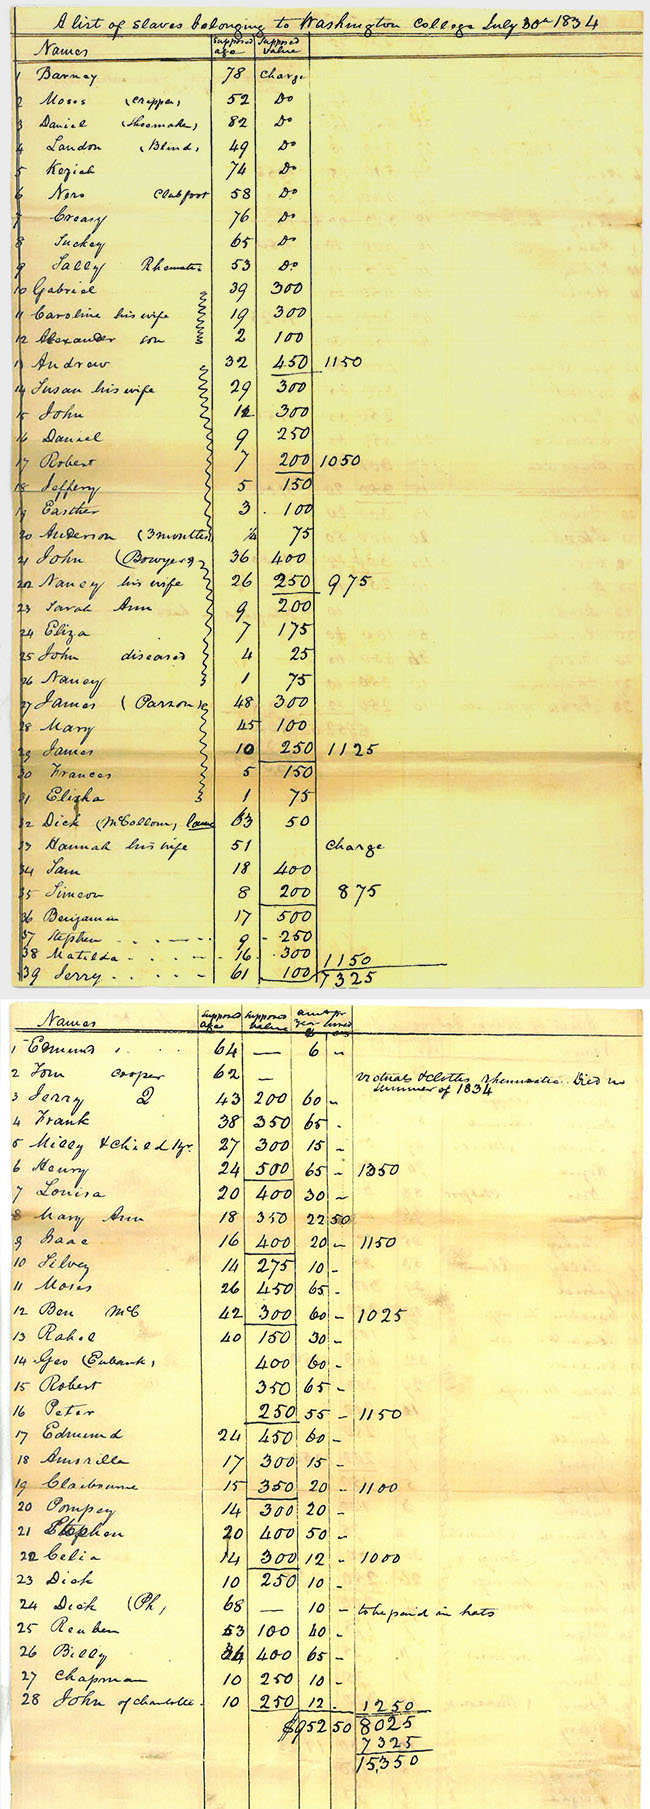 List of slaves belonging to Washington College